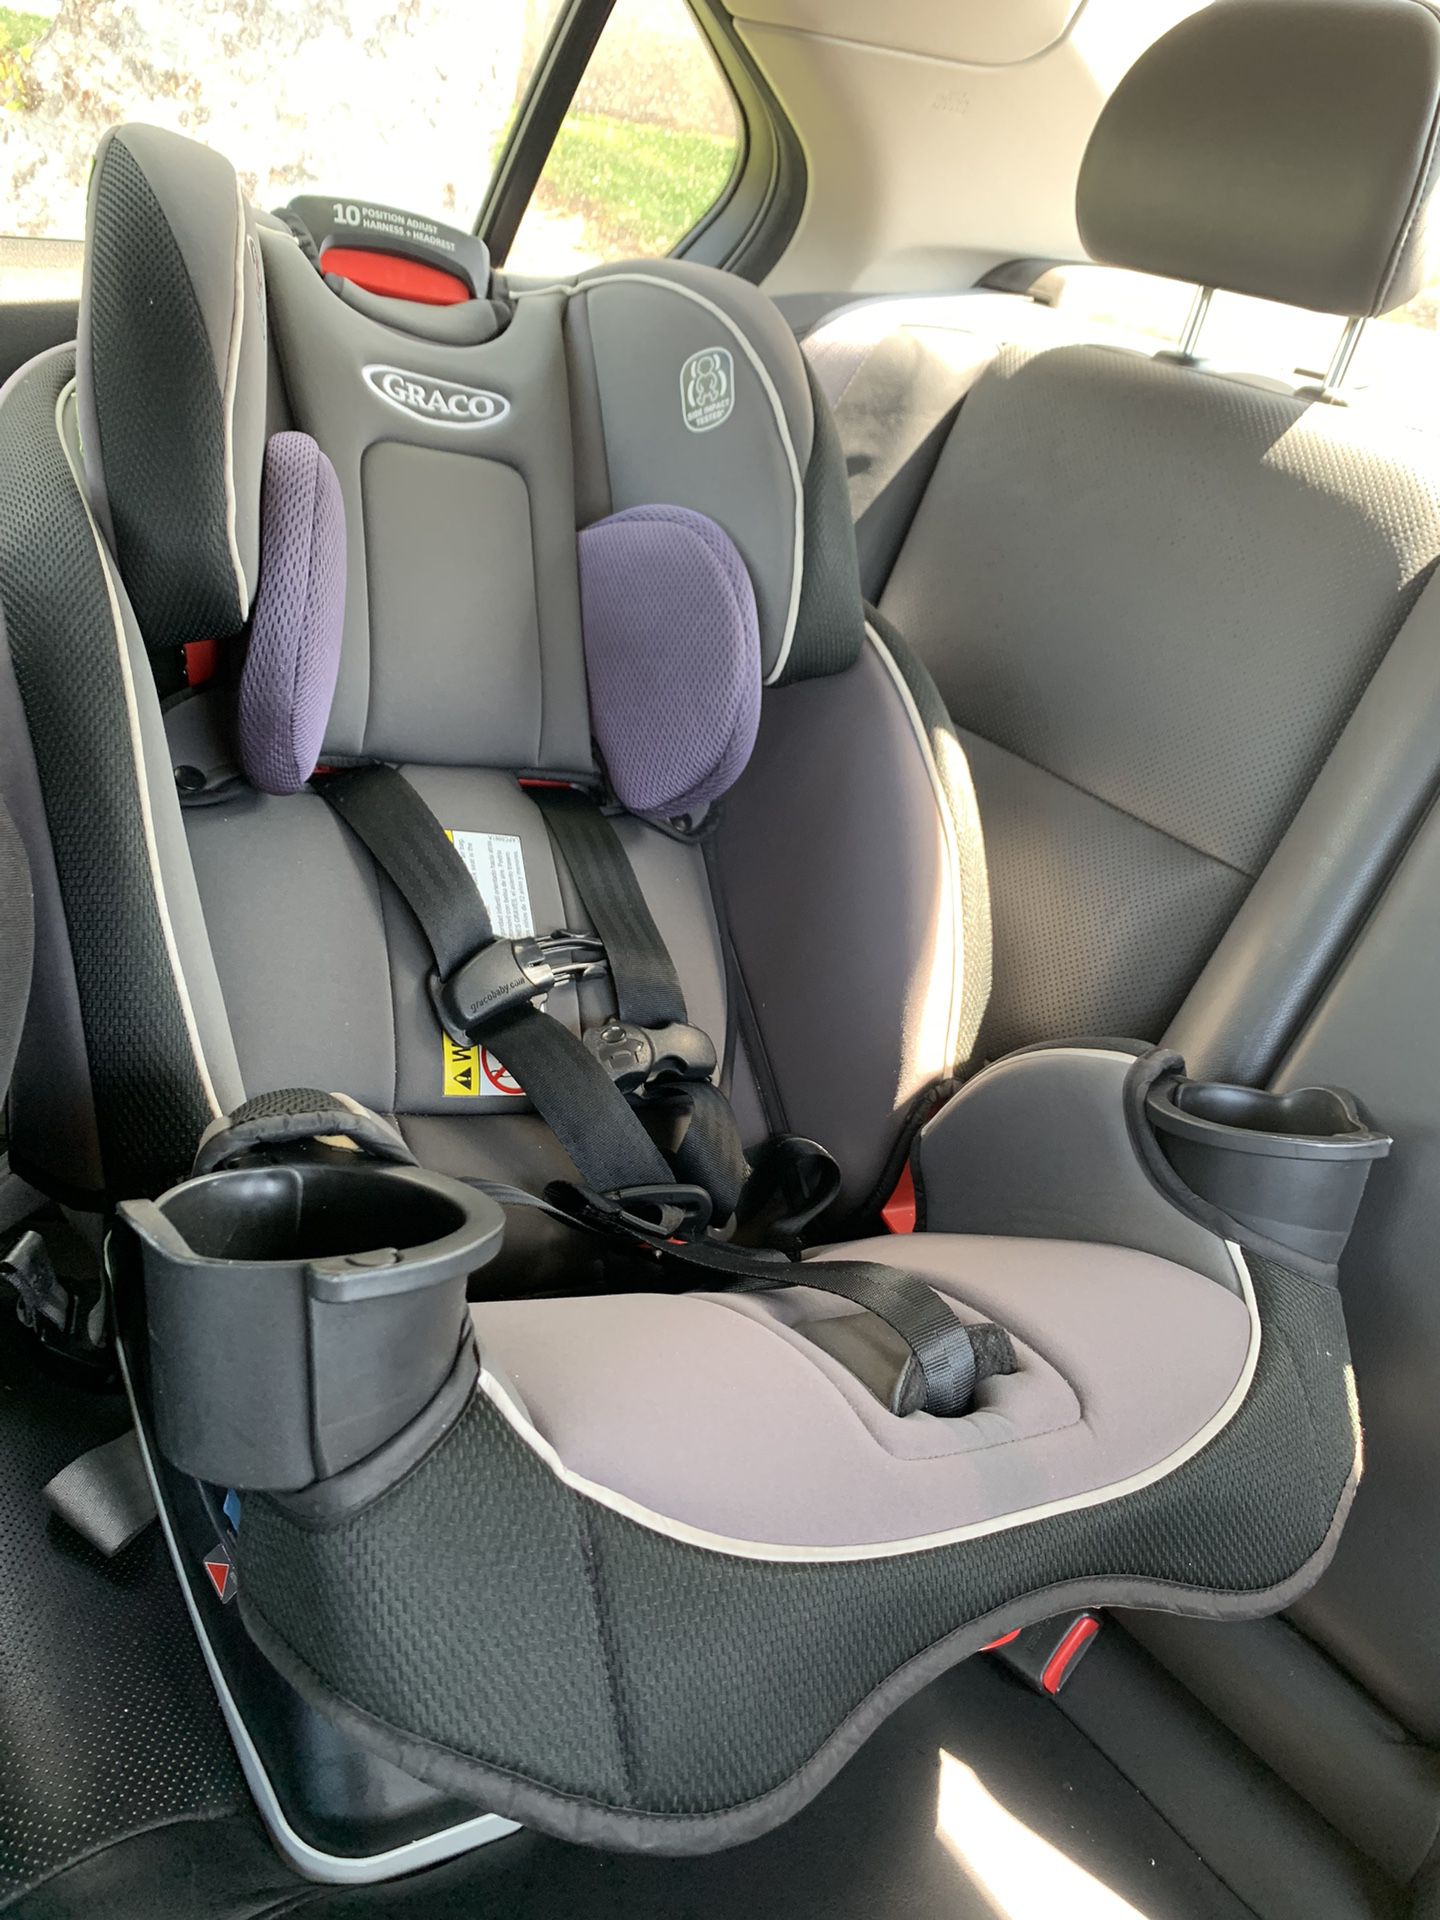 Infant/toddler Car Seat 